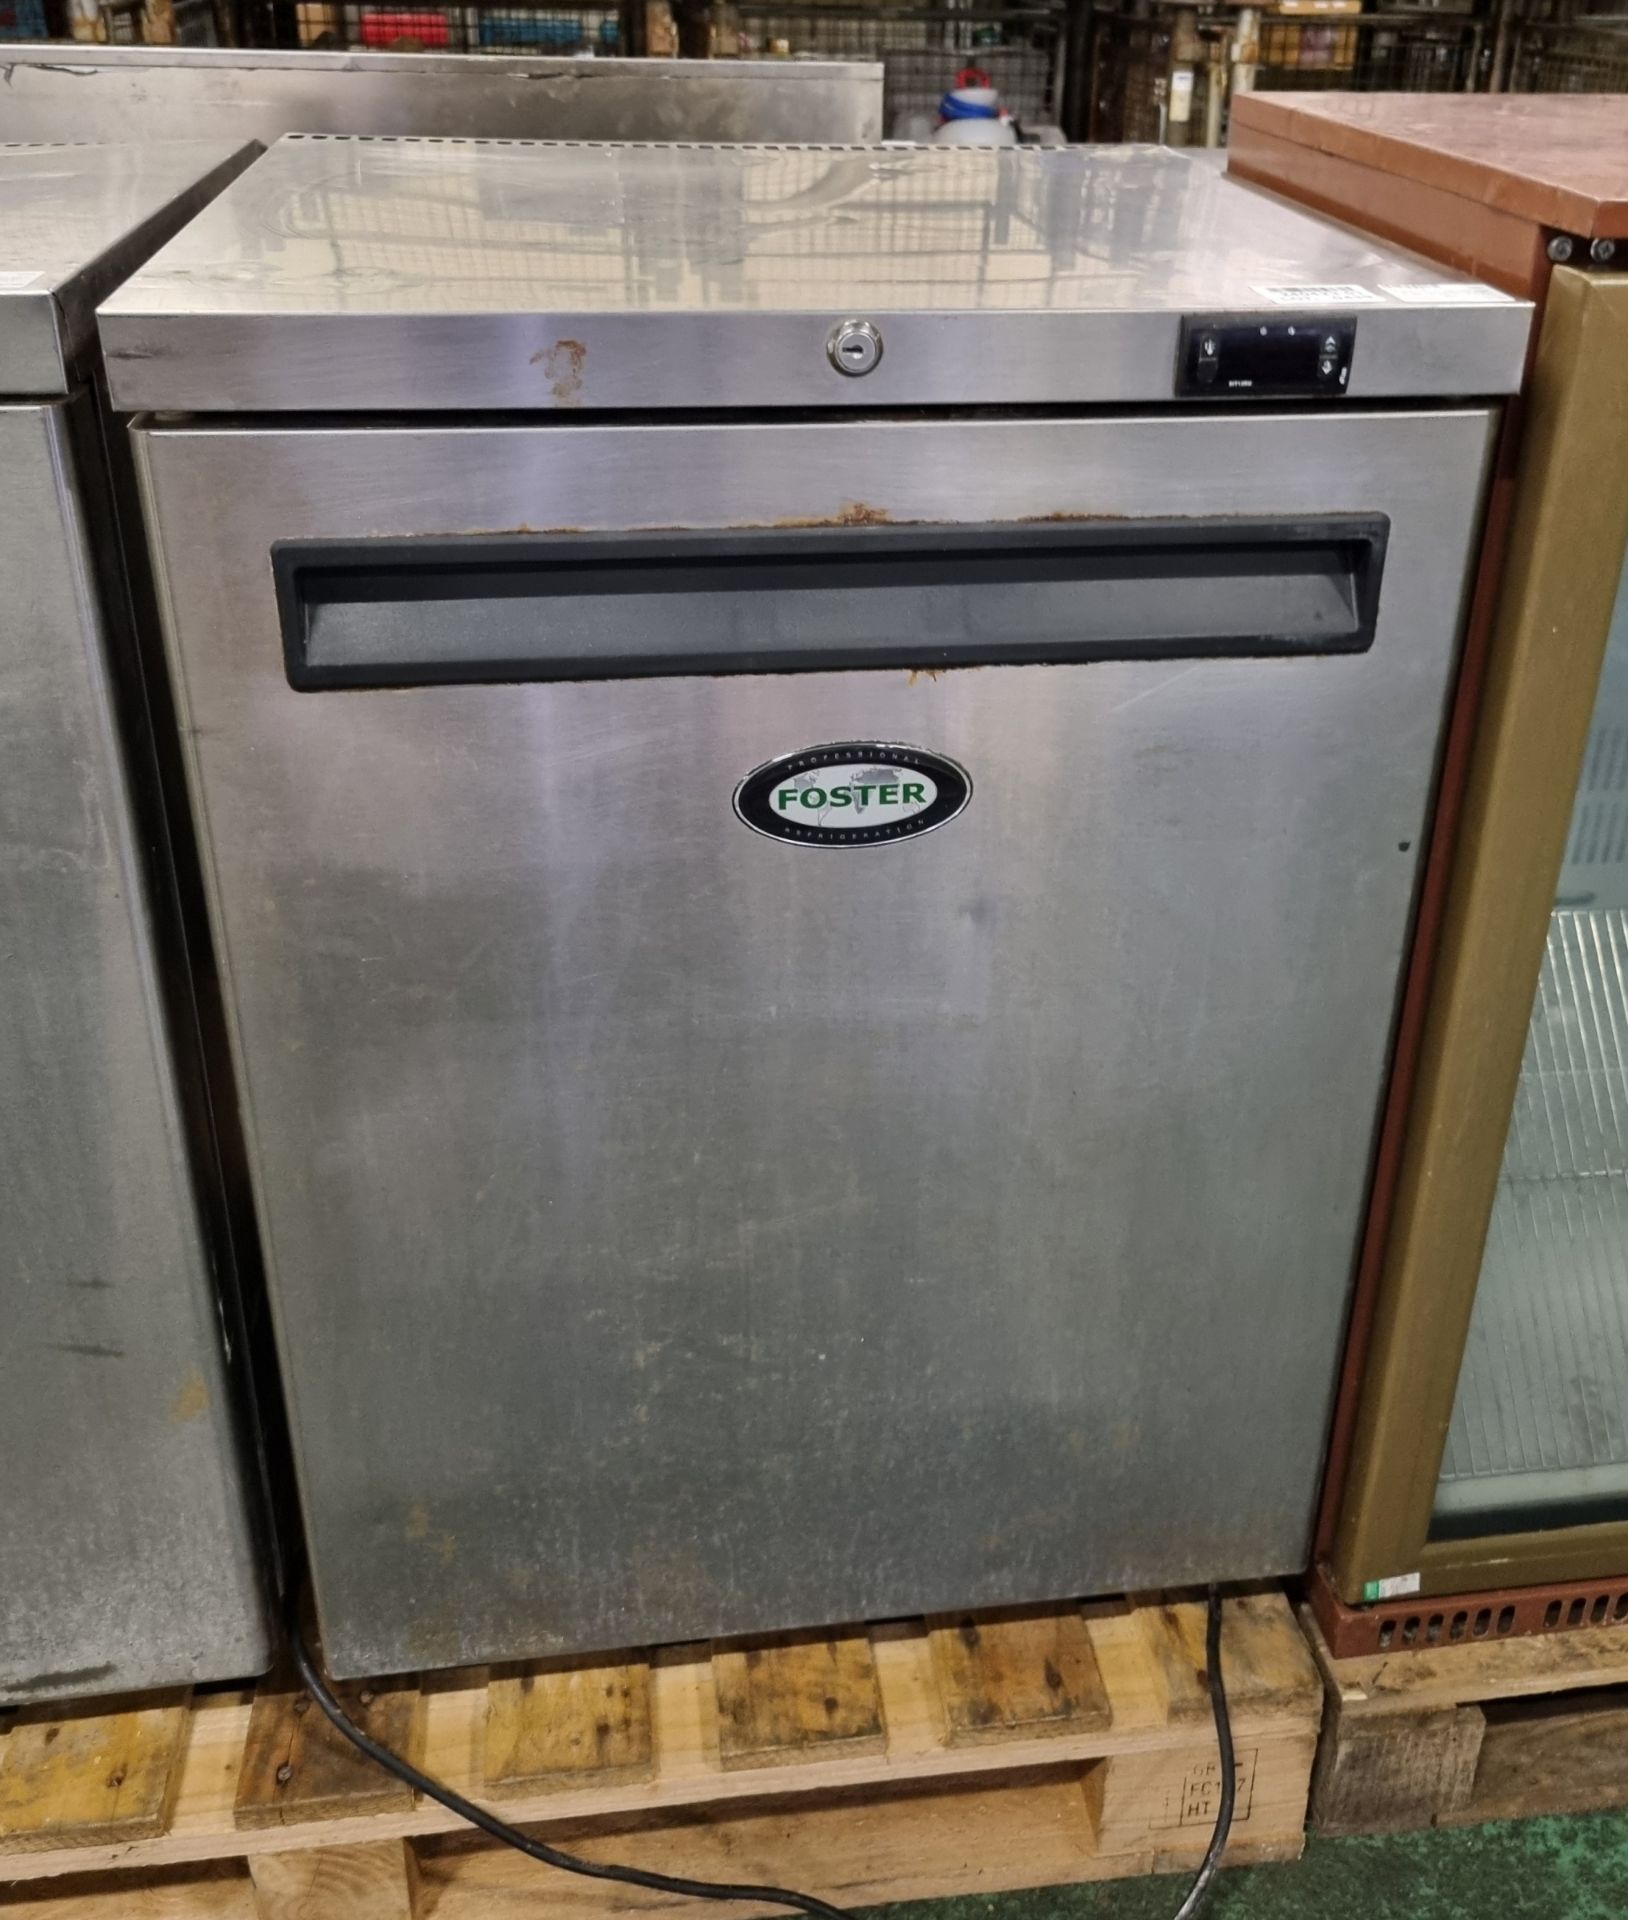 Foster HR140 stainless steel single door under counter fridge - W 605 x D 615 x H 830mm